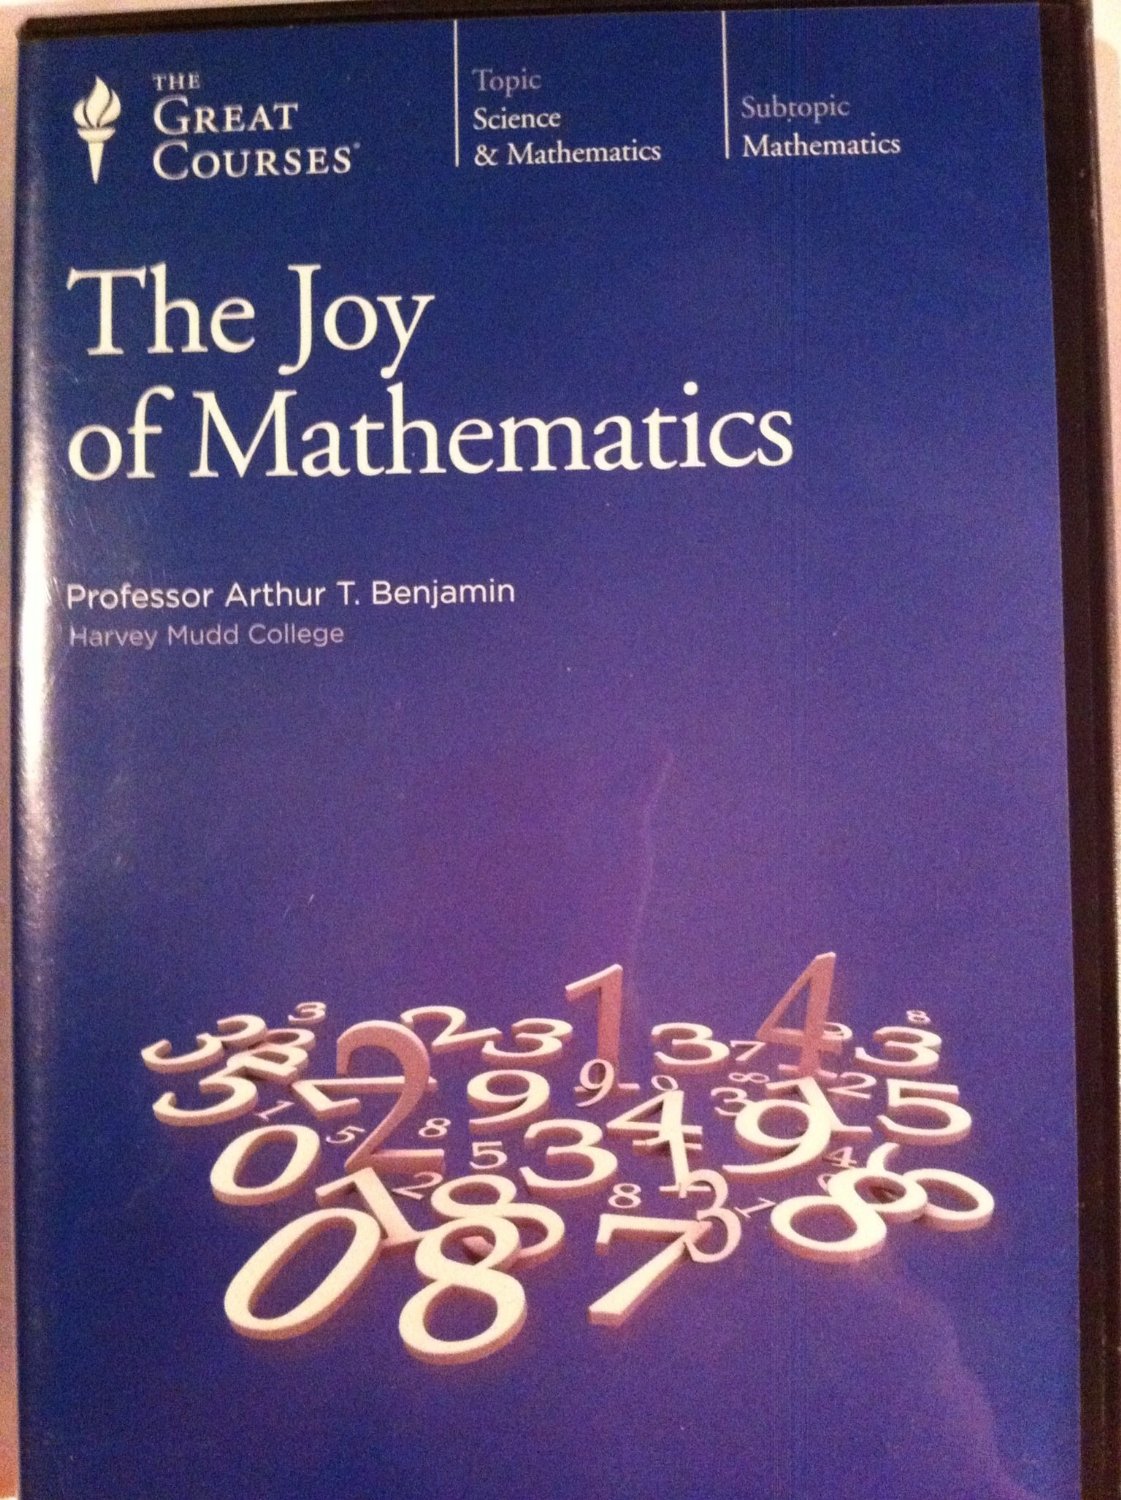 The Joy of Mathematical Magic